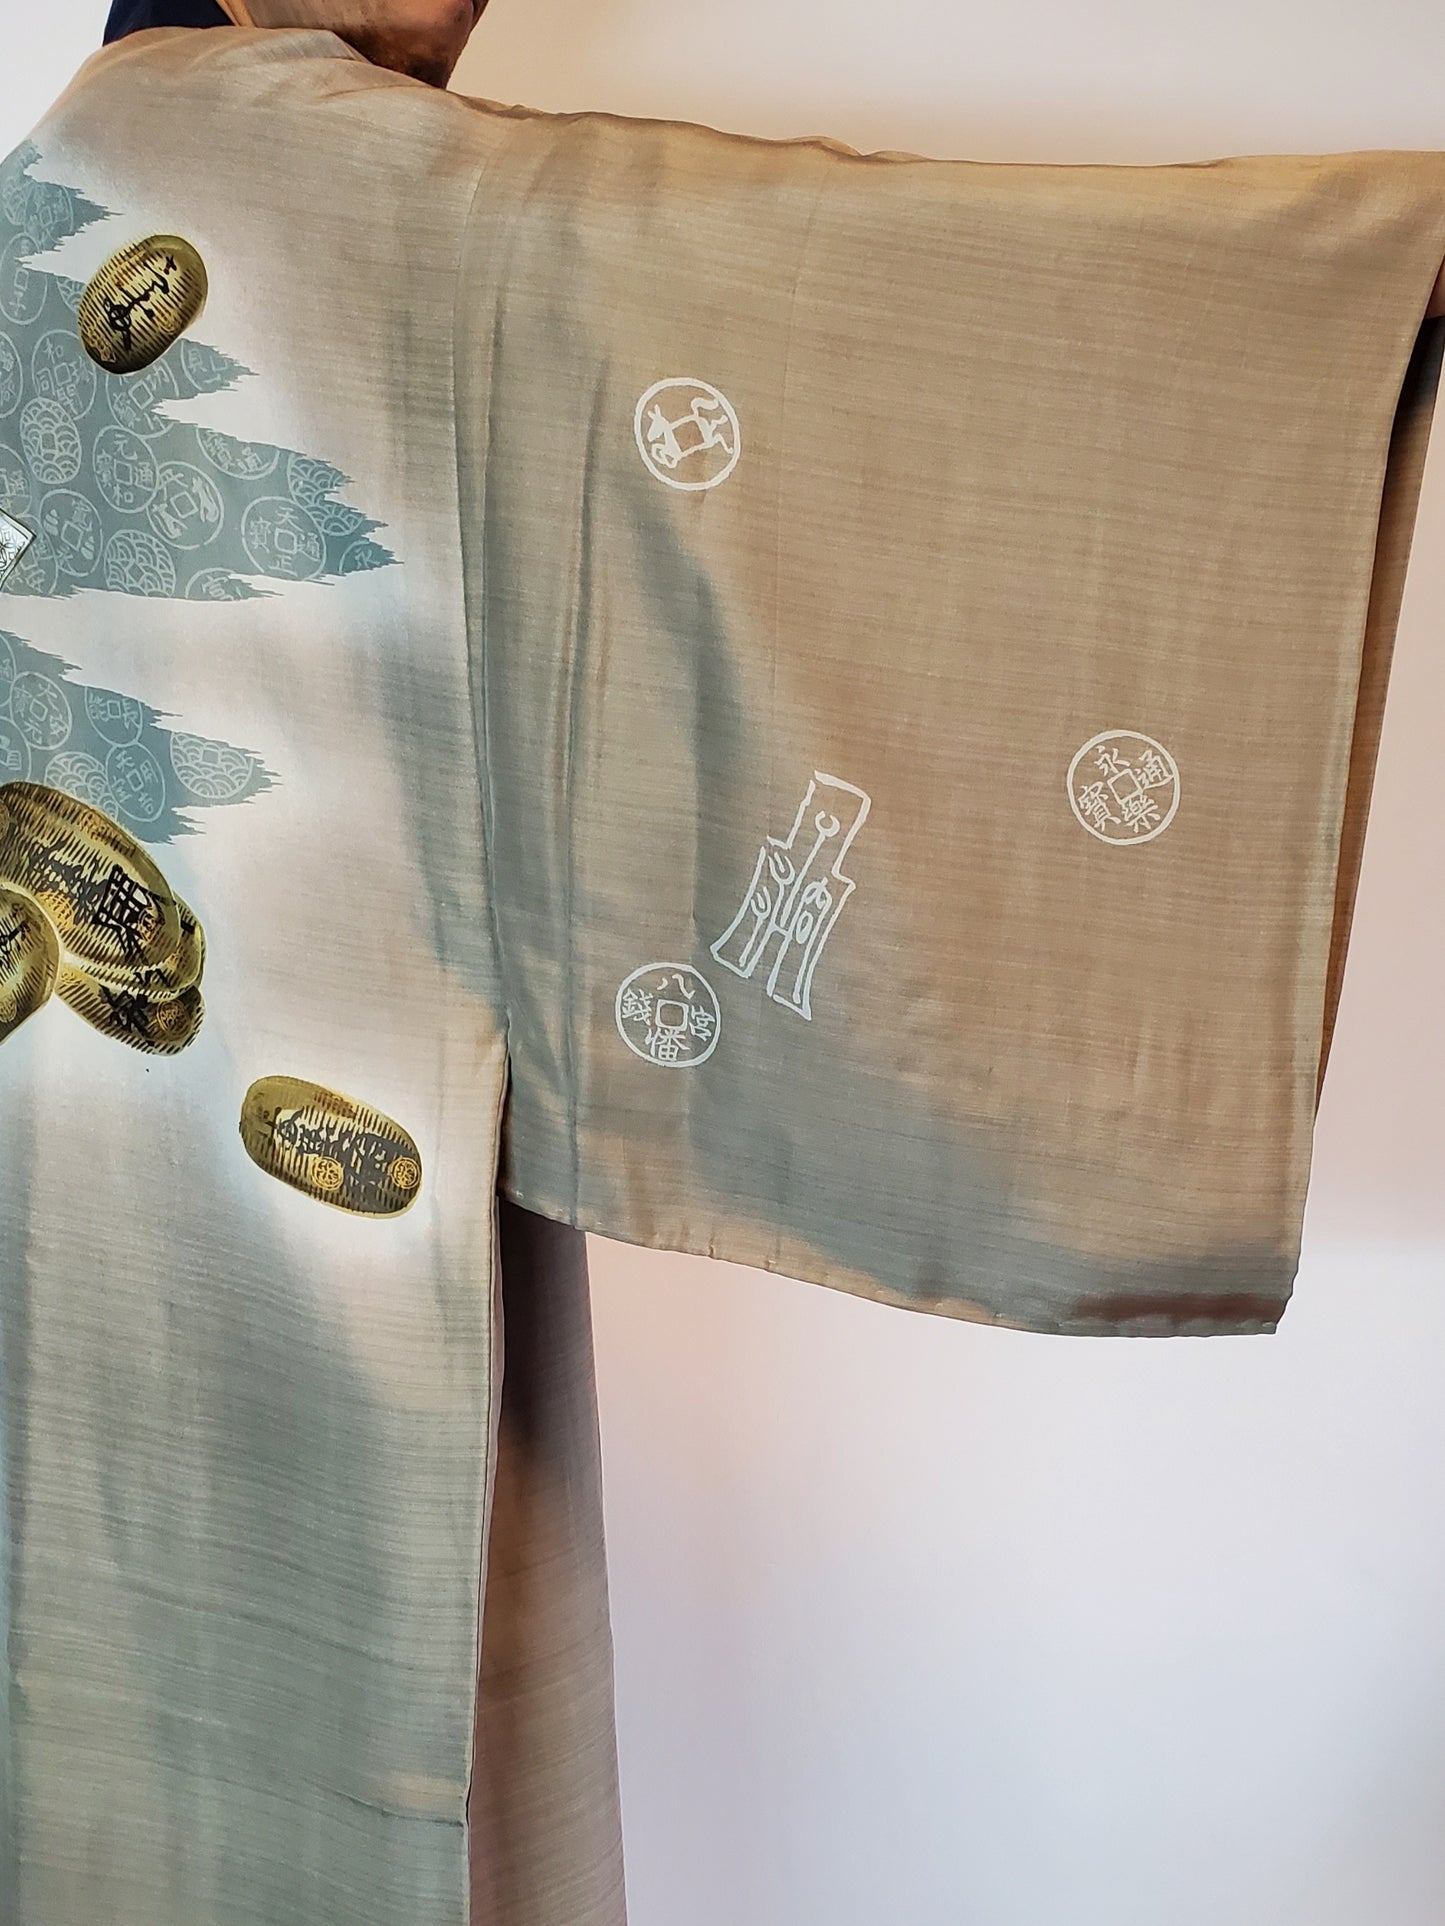 【Green / Old Money】 Mens Jyuban, Japonais vintage kimono haori, veste hanten japonaise, robe robe, motif floral japonais, unisexe